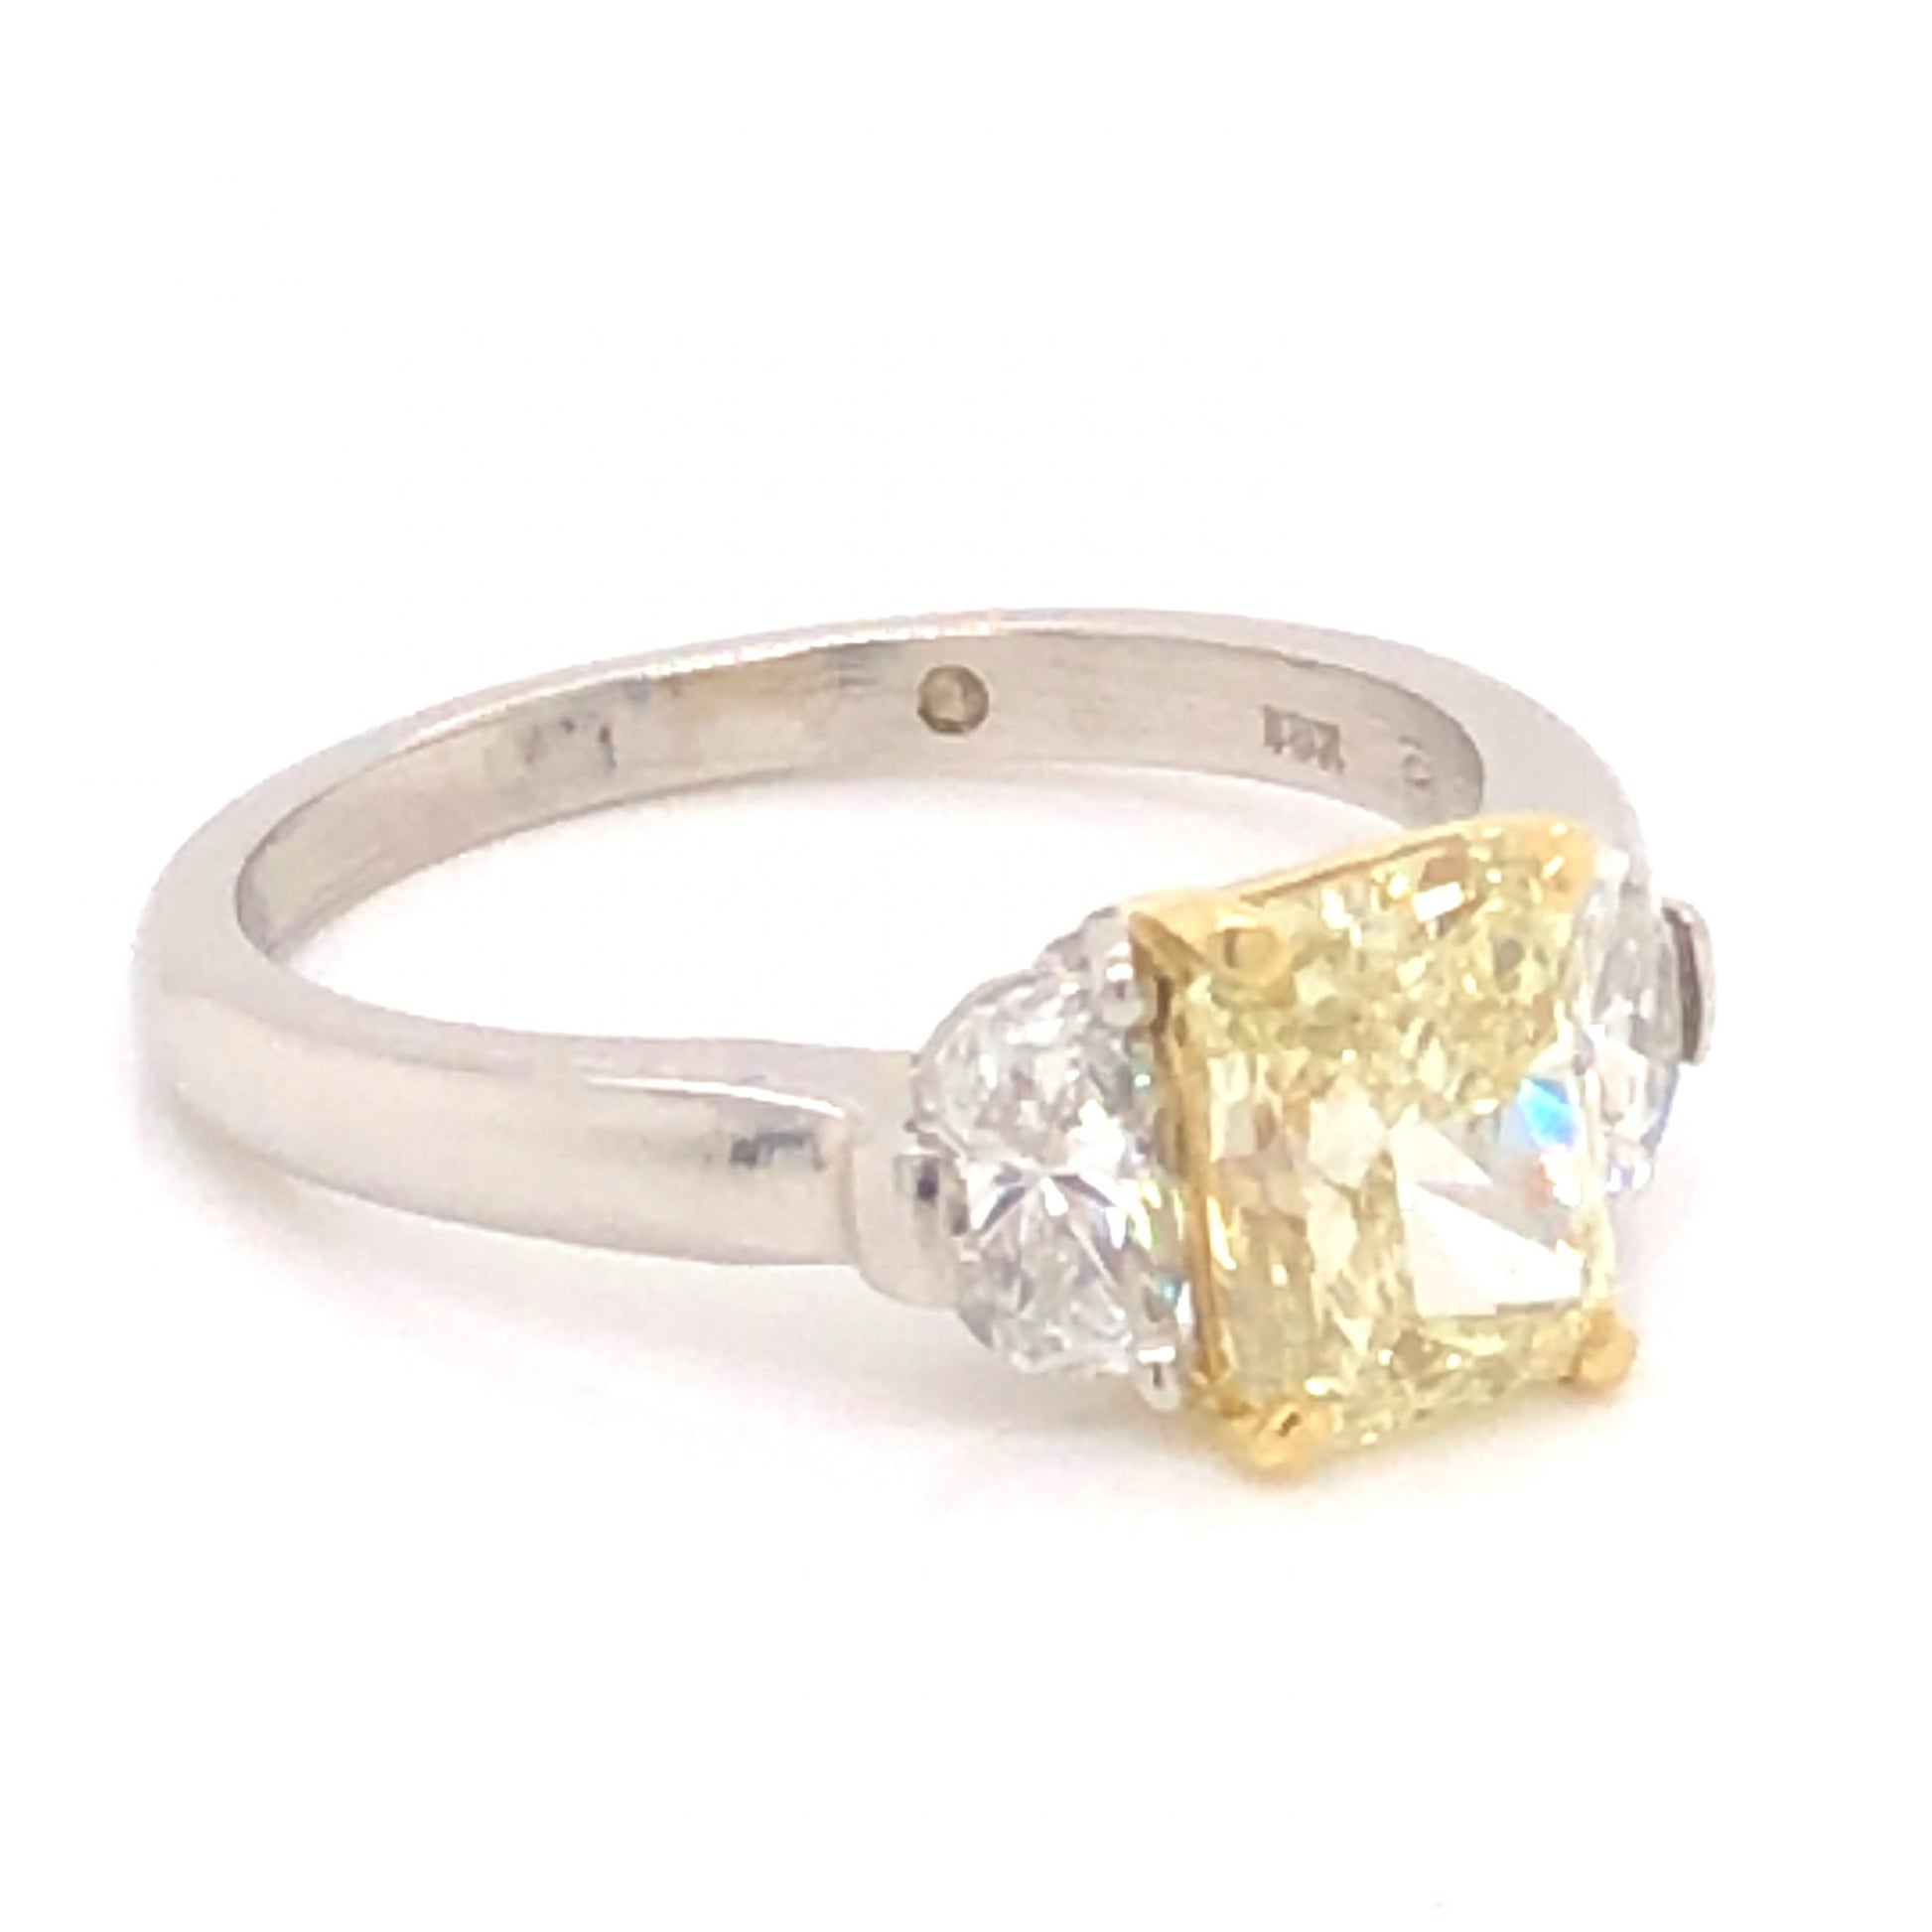 1.80 Yellow Diamond Engagement Ring in Platinum & 18k Yellow GoldComposition: Platinum/18 Karat Yellow Gold Ring Size: 6.5 Total Diamond Weight: 2.90ct Total Gram Weight: 5.7 g Inscription: 10% IRD PLAT, 18K
      